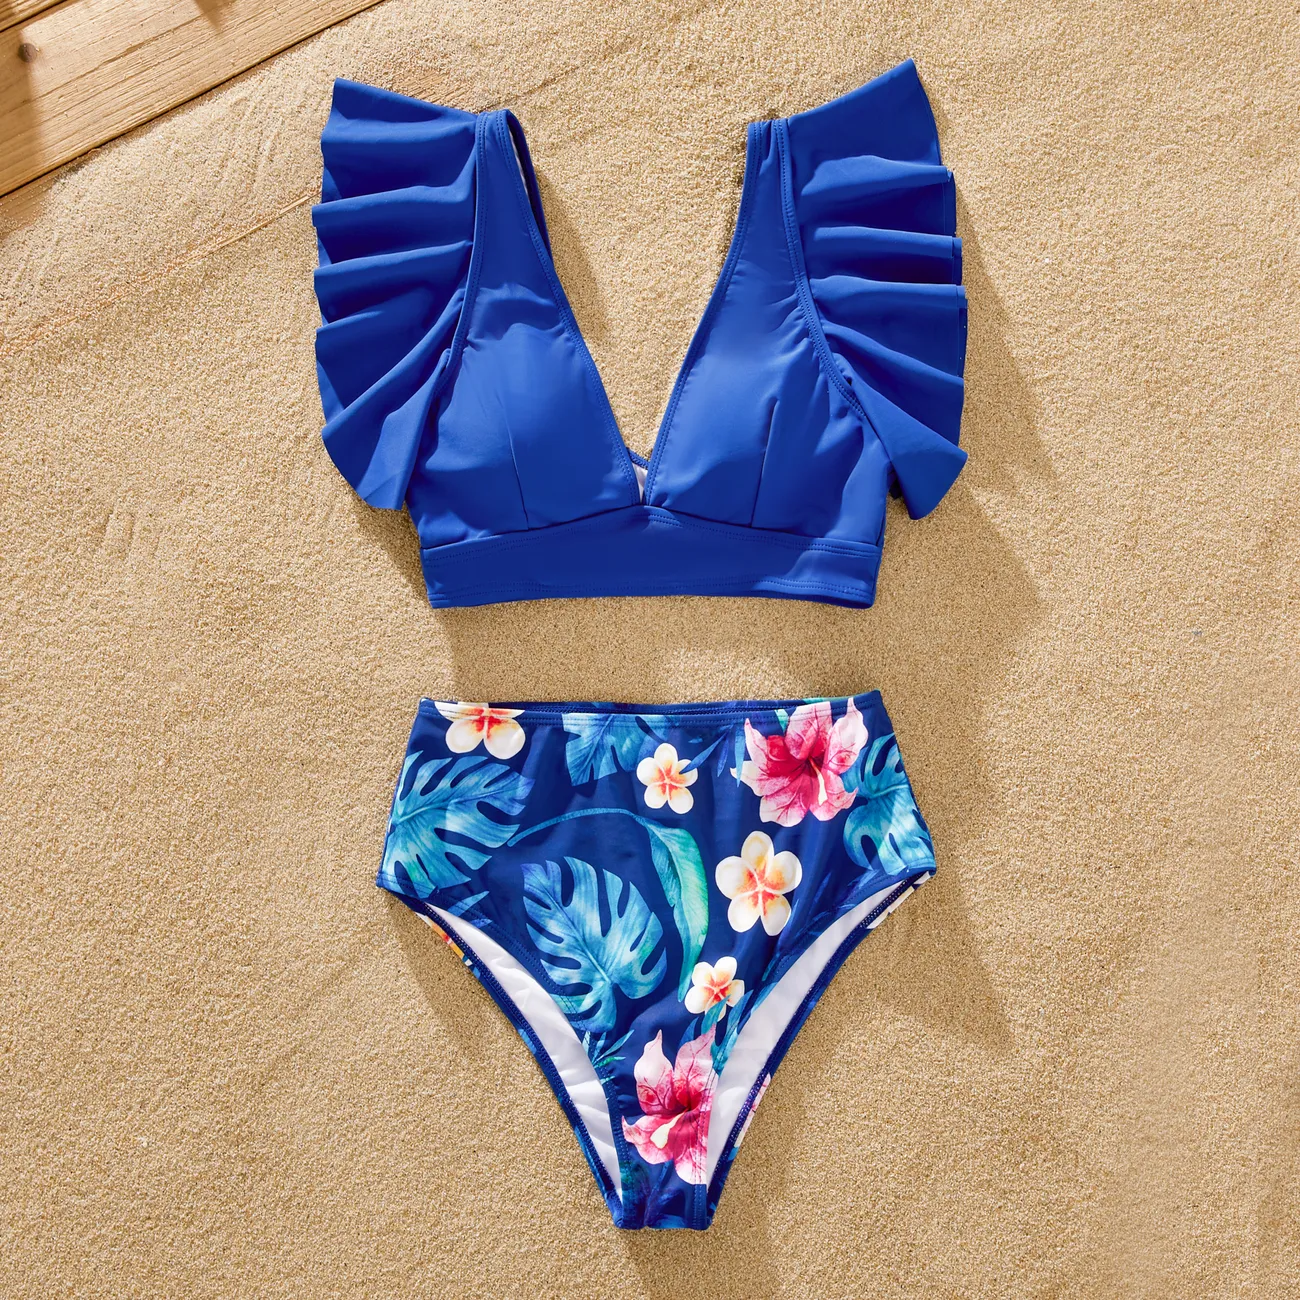 Family Matching Blue Floral Drawstring Swim Trunk or Ruffle Sleeves Bikini Blue big image 1